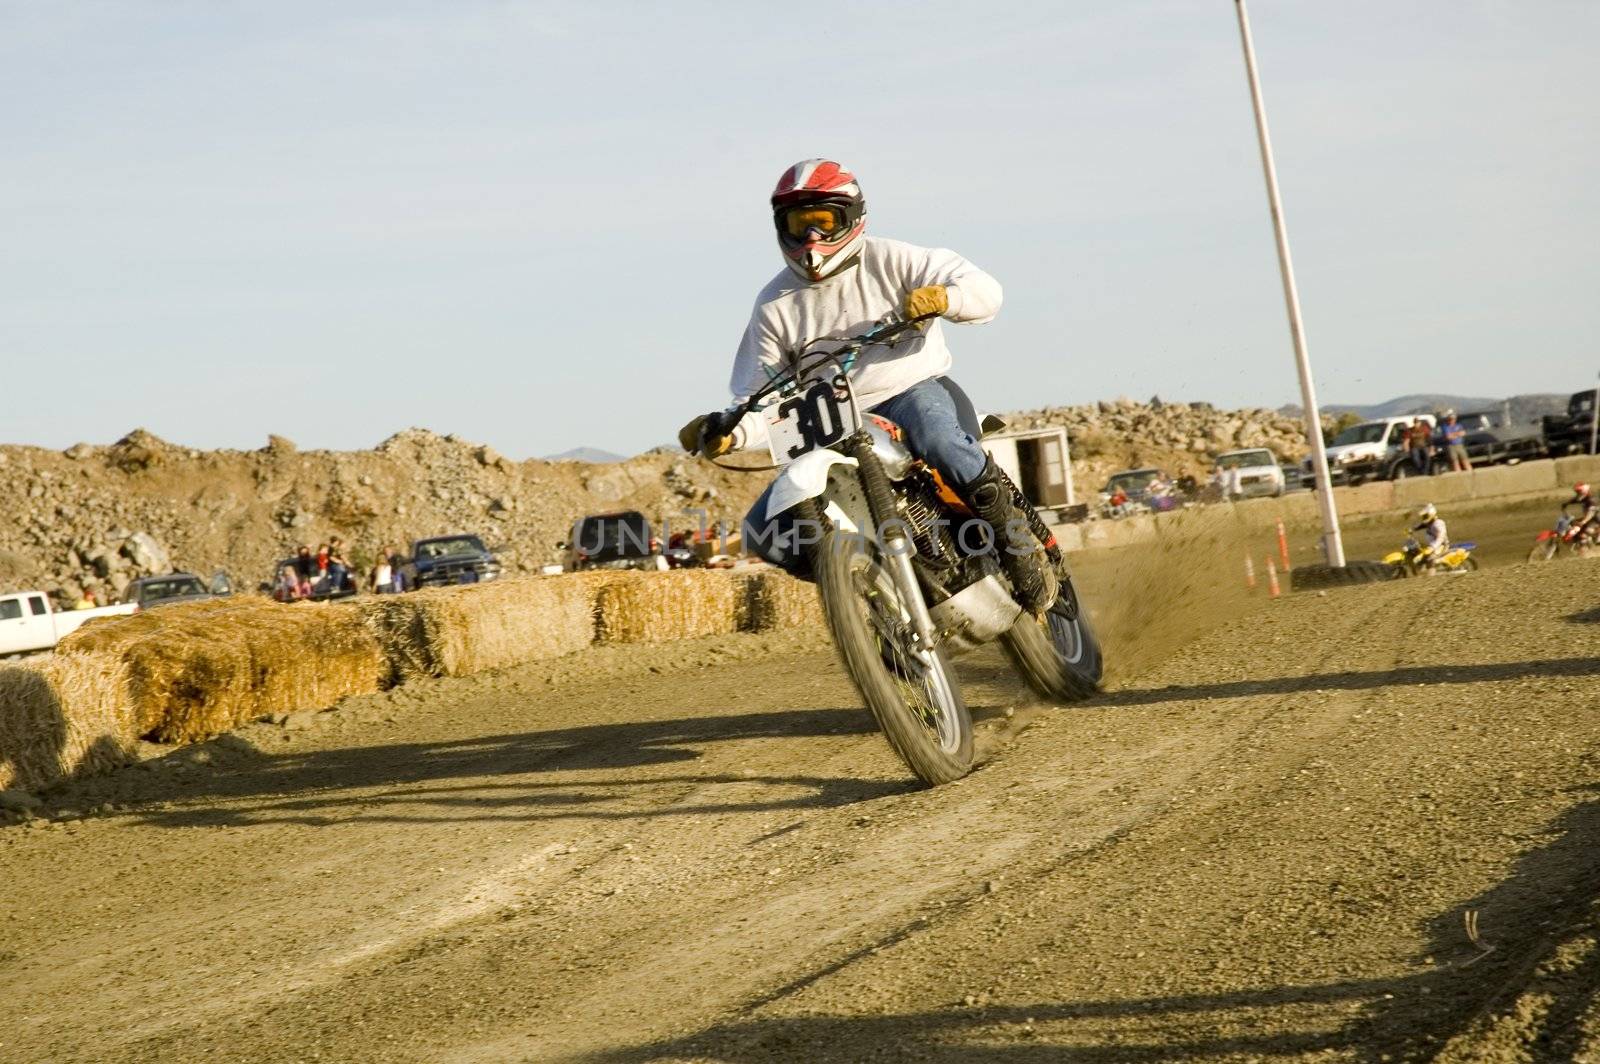 Dirt bike racers on track